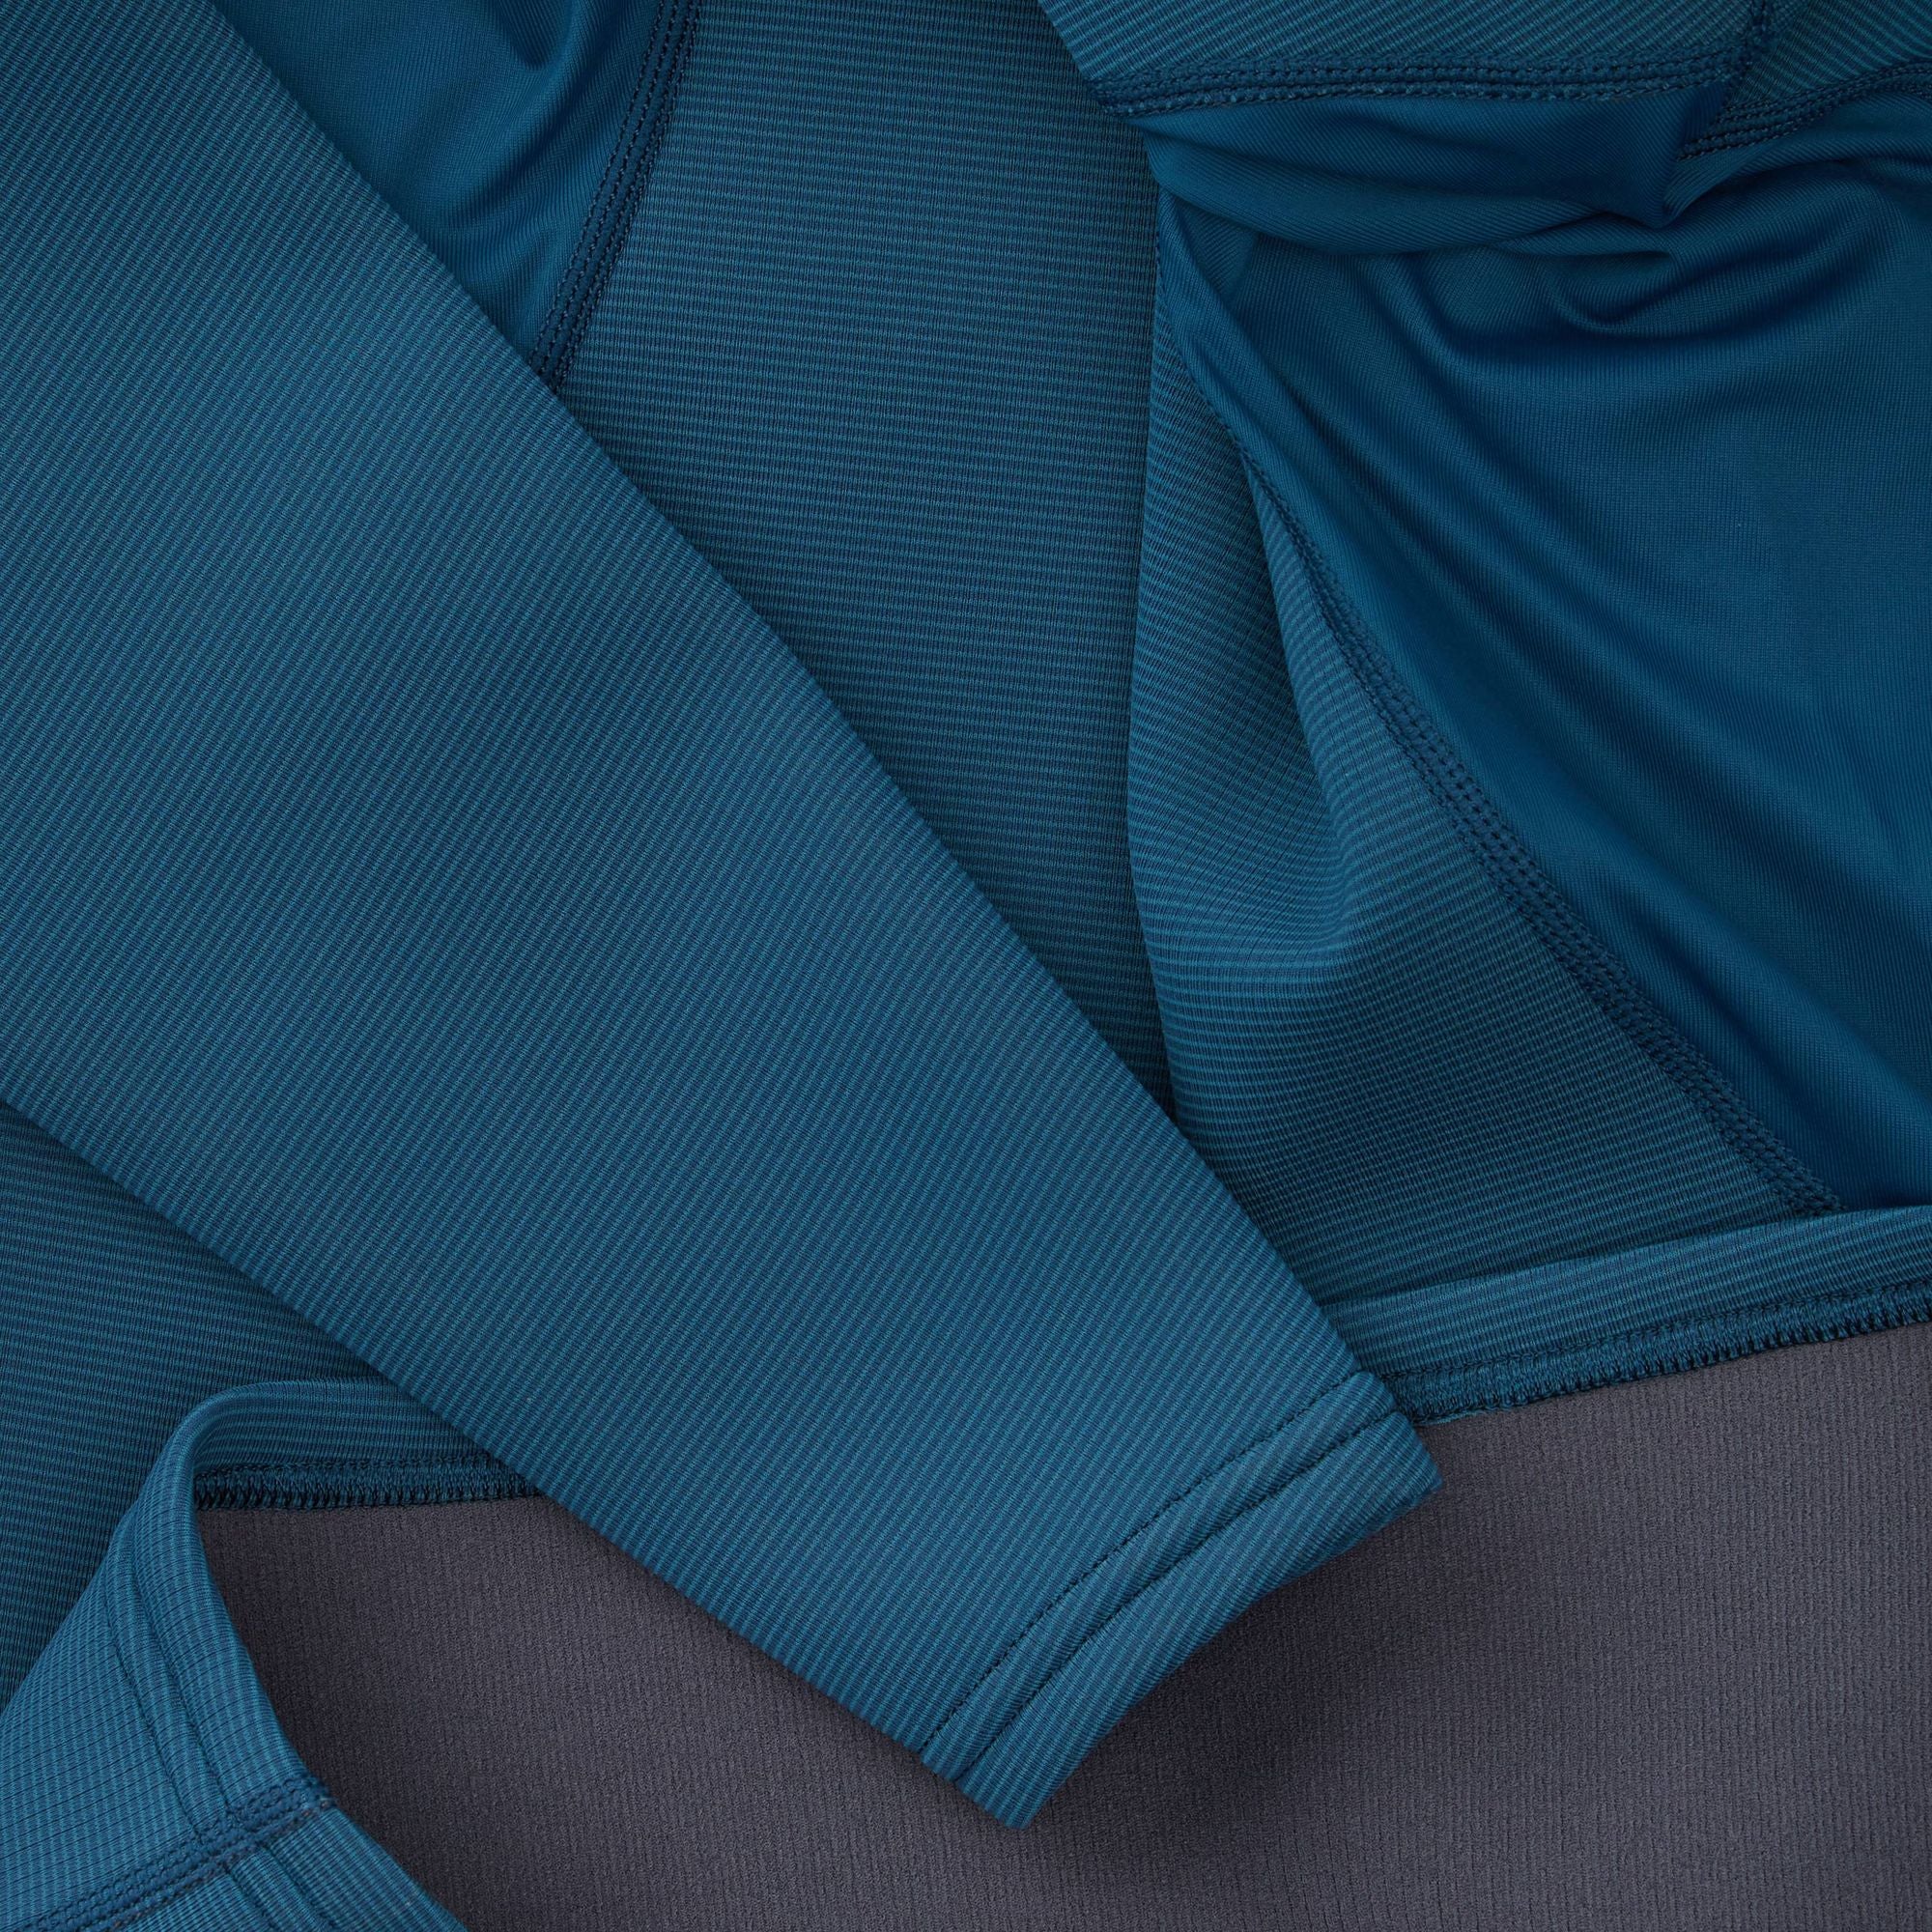 NRS - Men's HydroSkin 0.5 Long-Sleeve Shirt